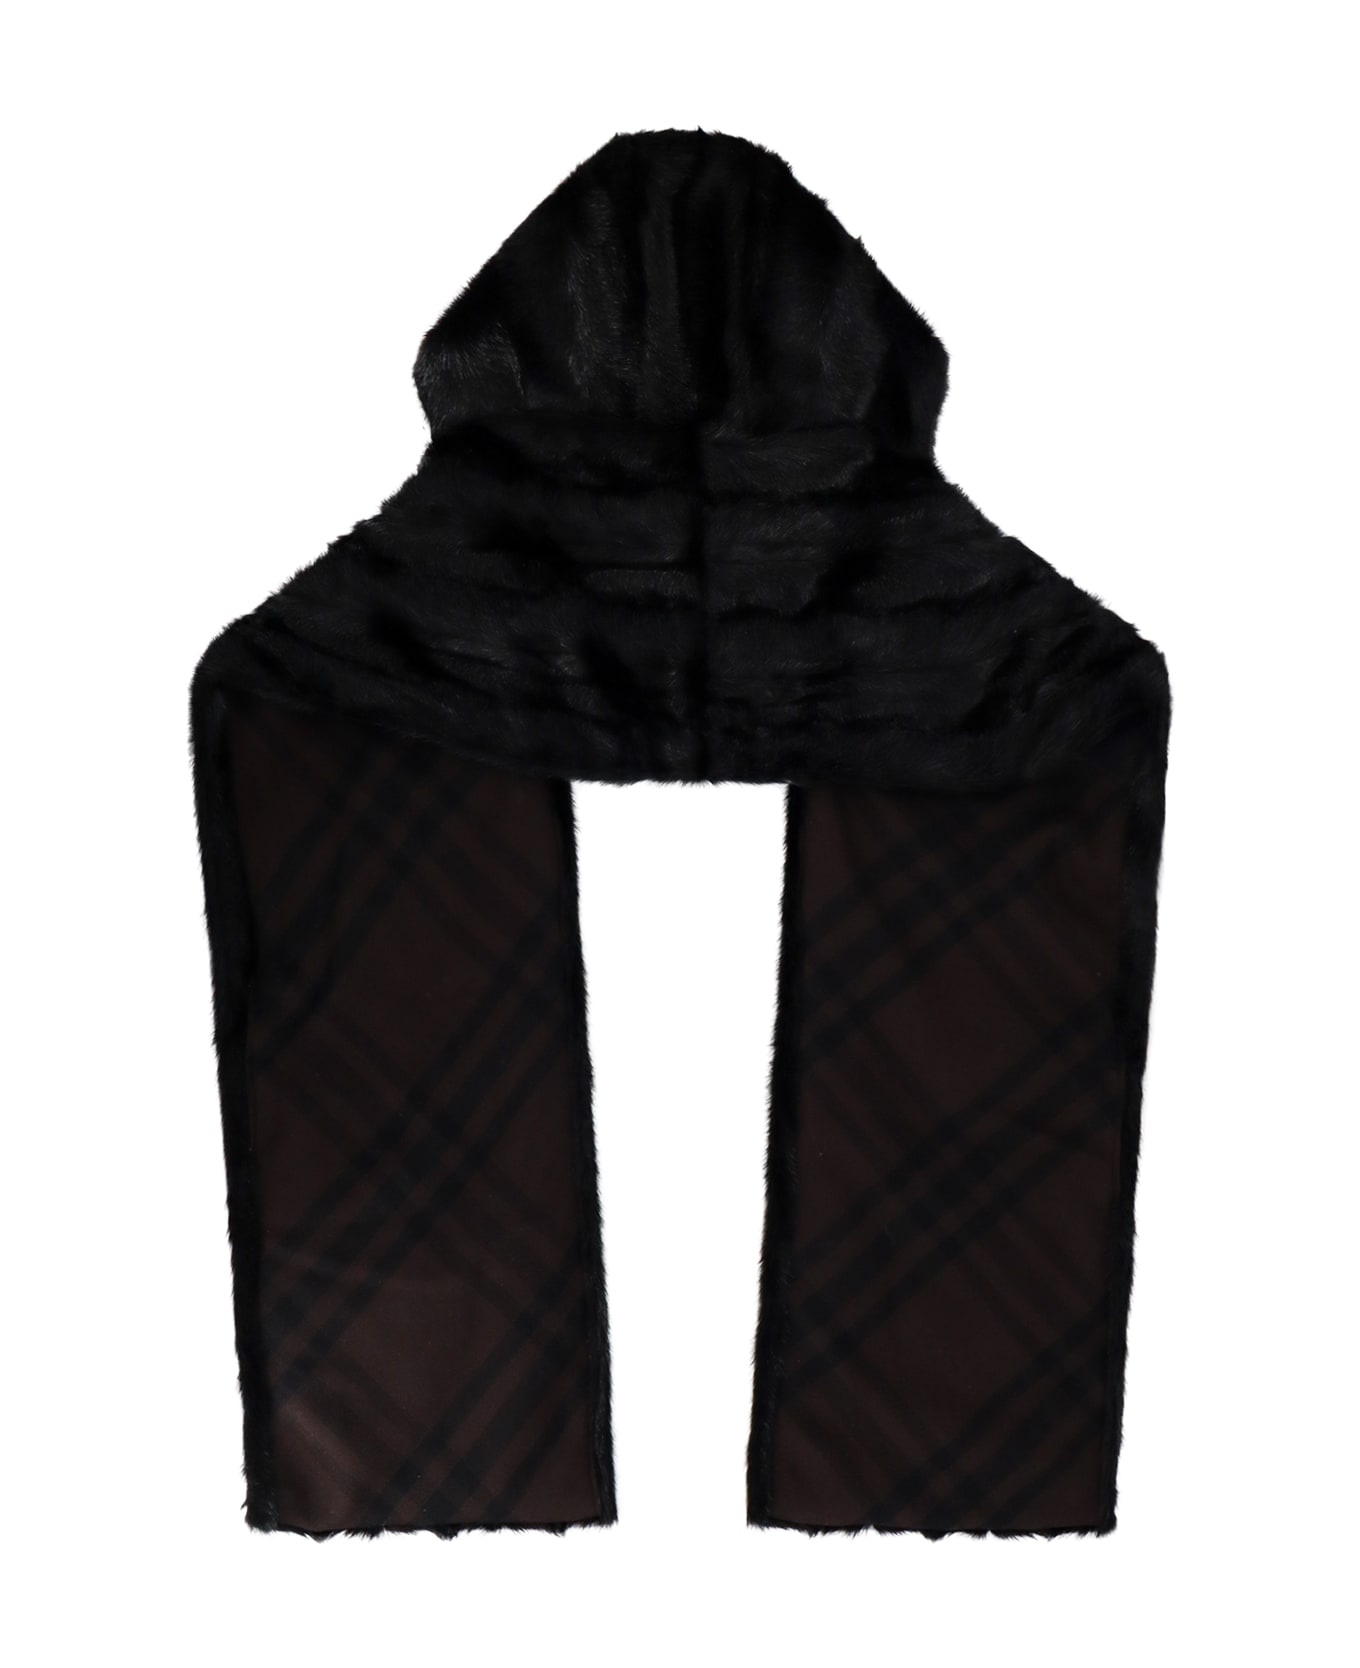 Burberry Black Scarf With Faux Fur Hood - Black スカーフ